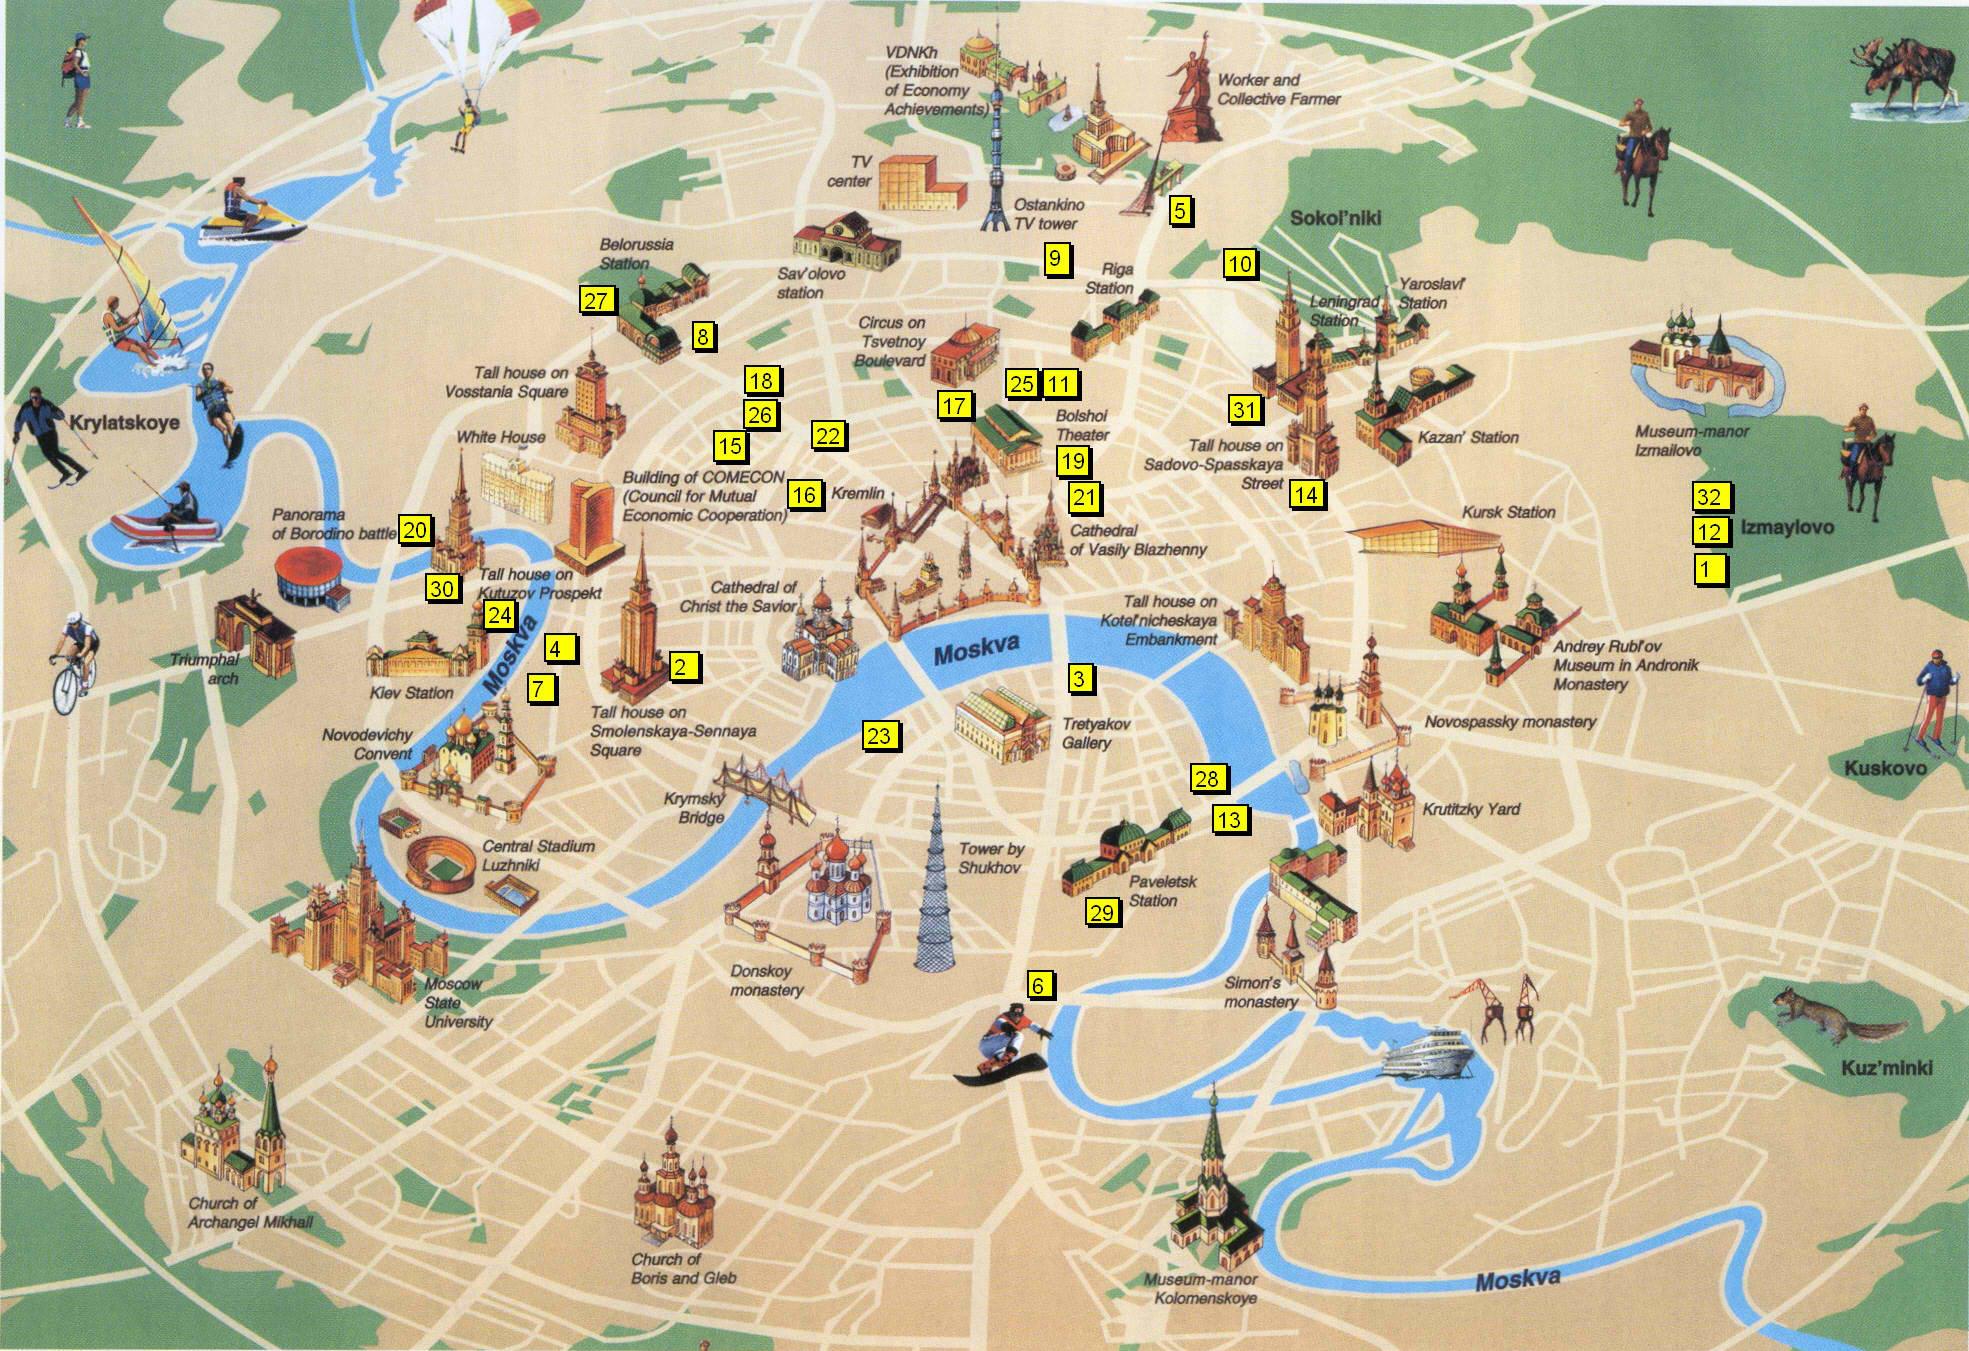 london térkép Londoni turisztikai látnivalók térkép   London Térkép látnivalók  london térkép